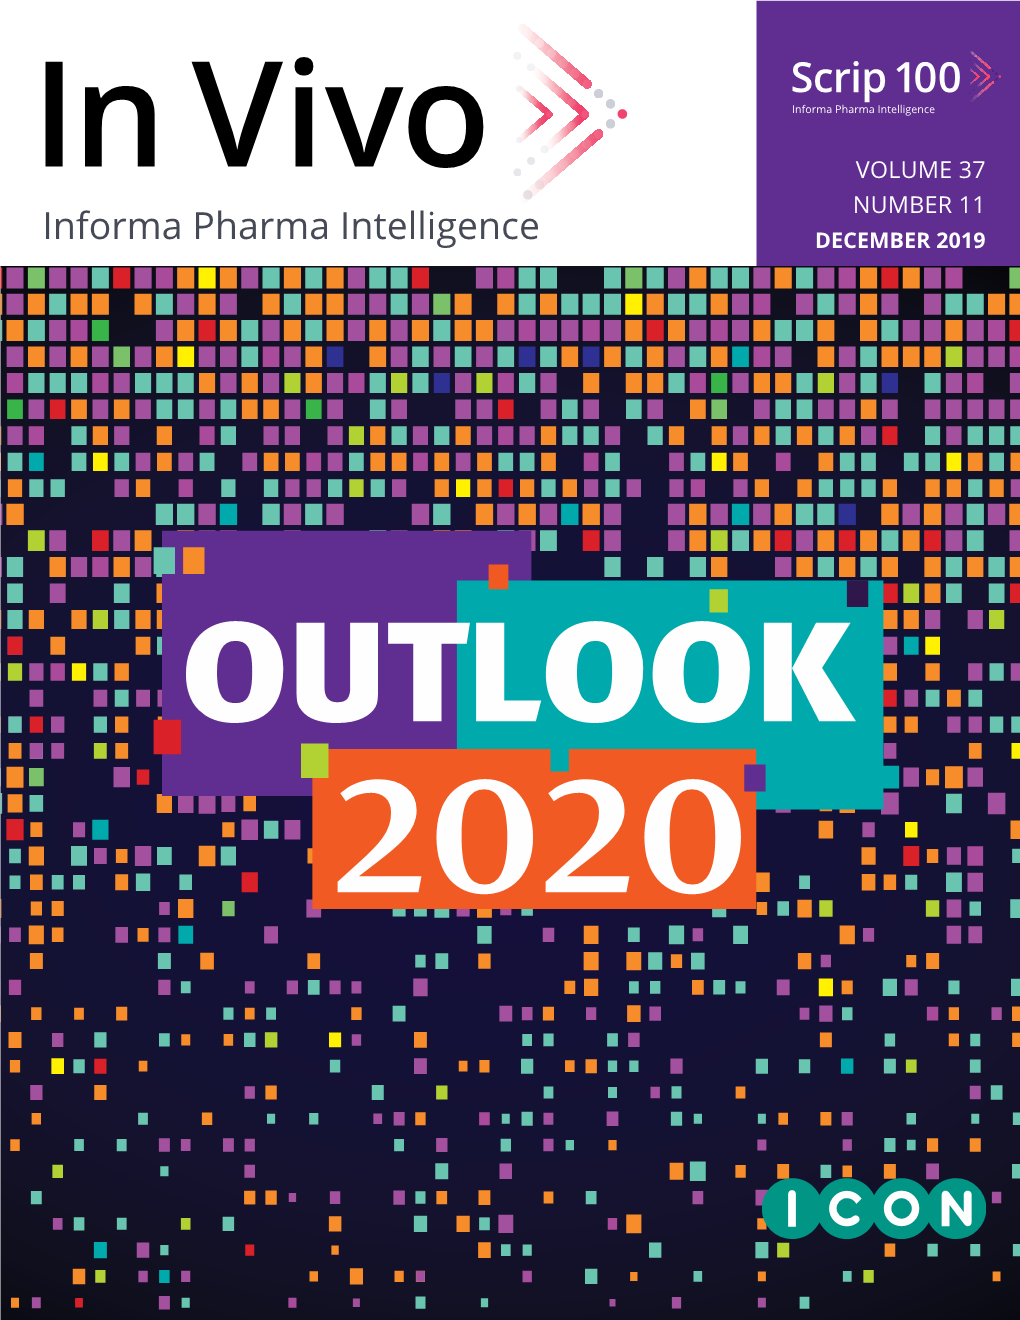 In Vivo's Outlook 2020